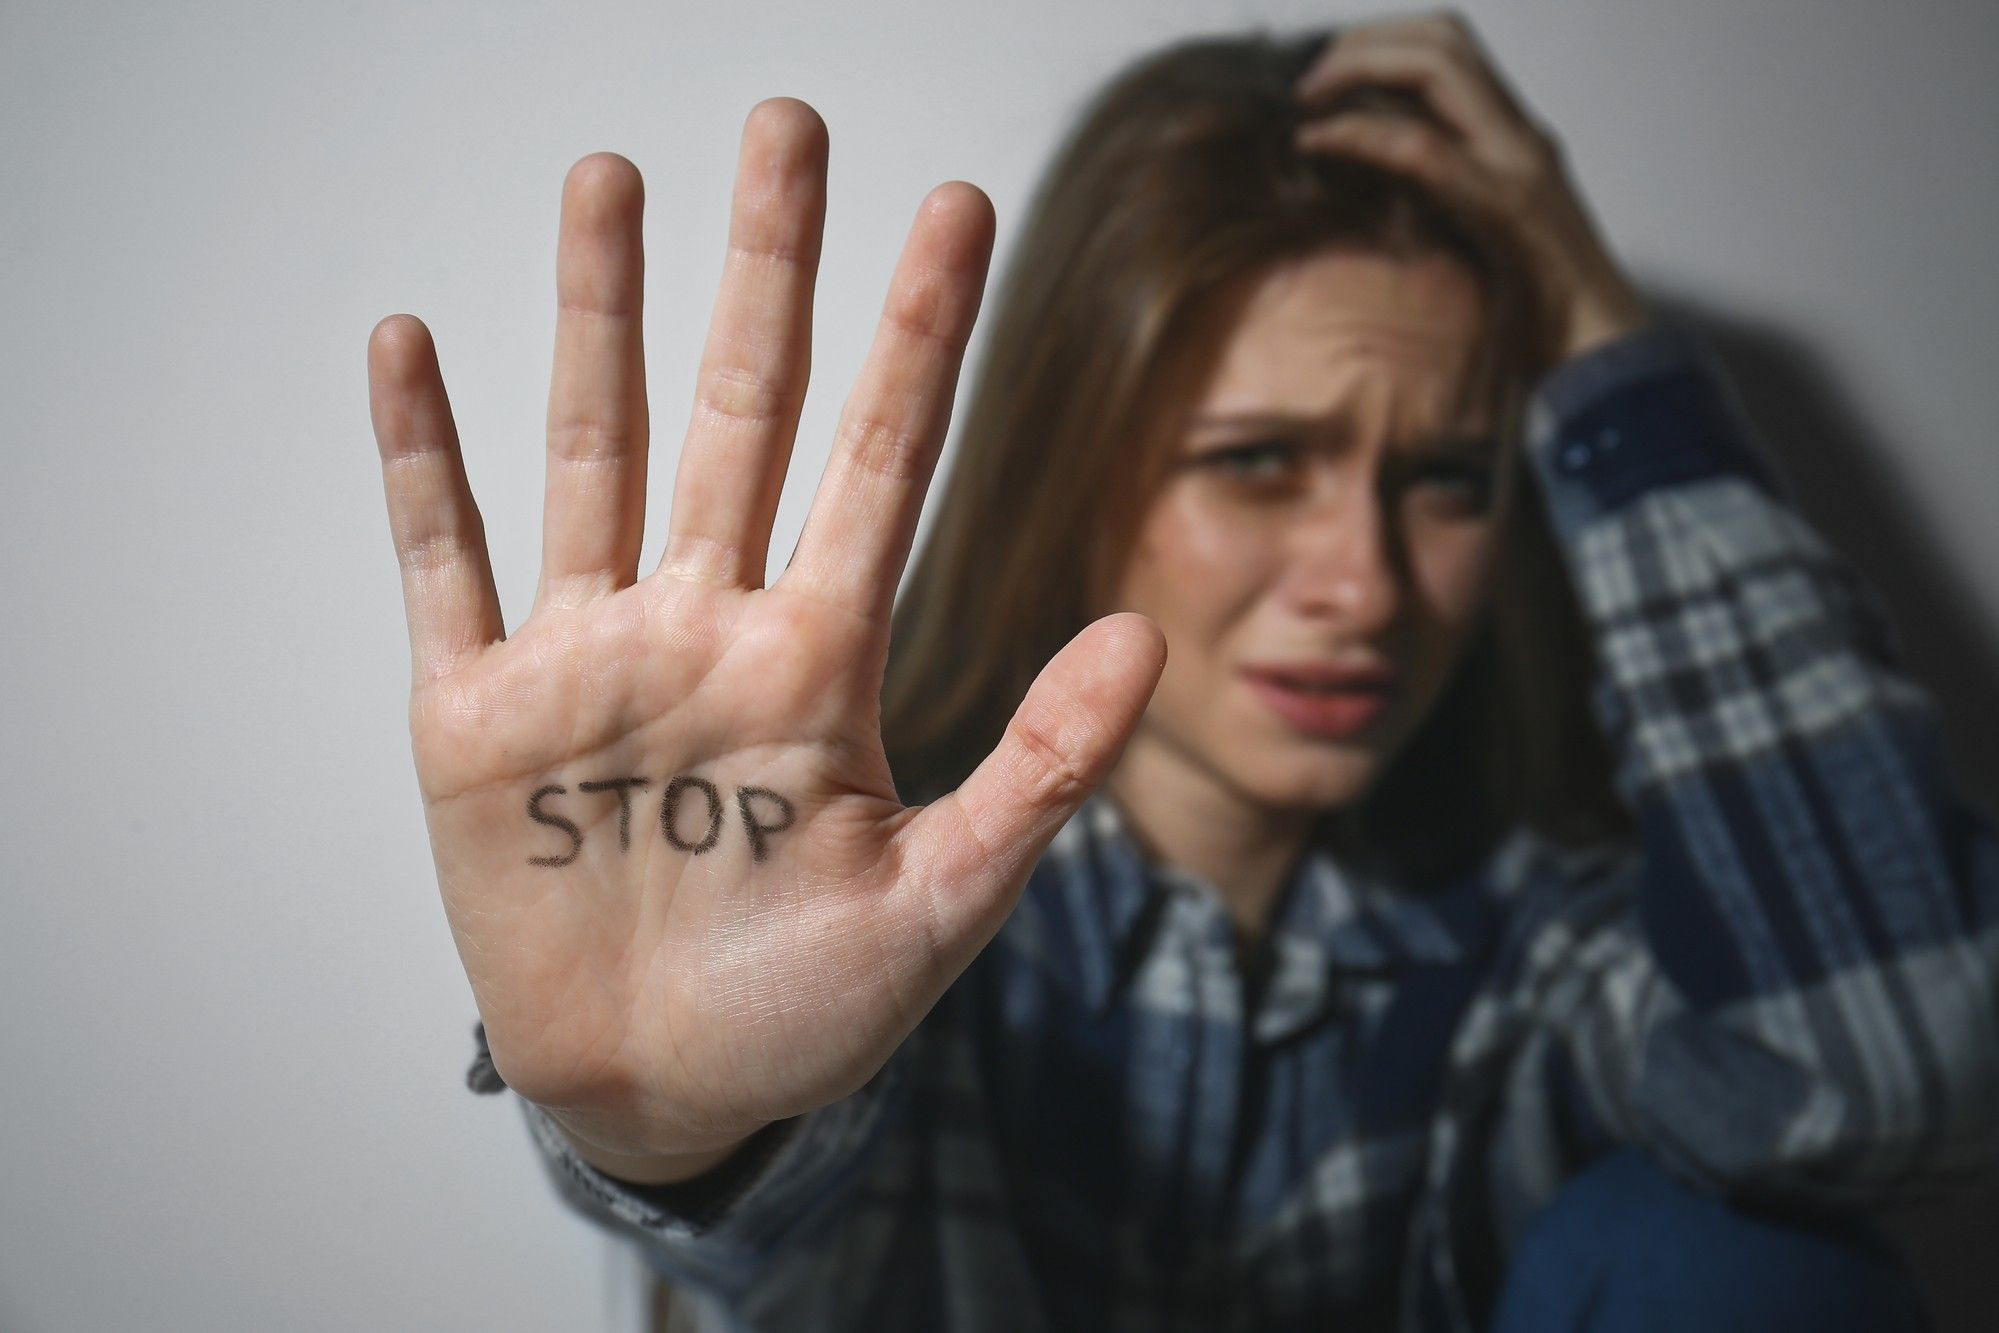 abused-teenage-girl-with-stop-on-hand